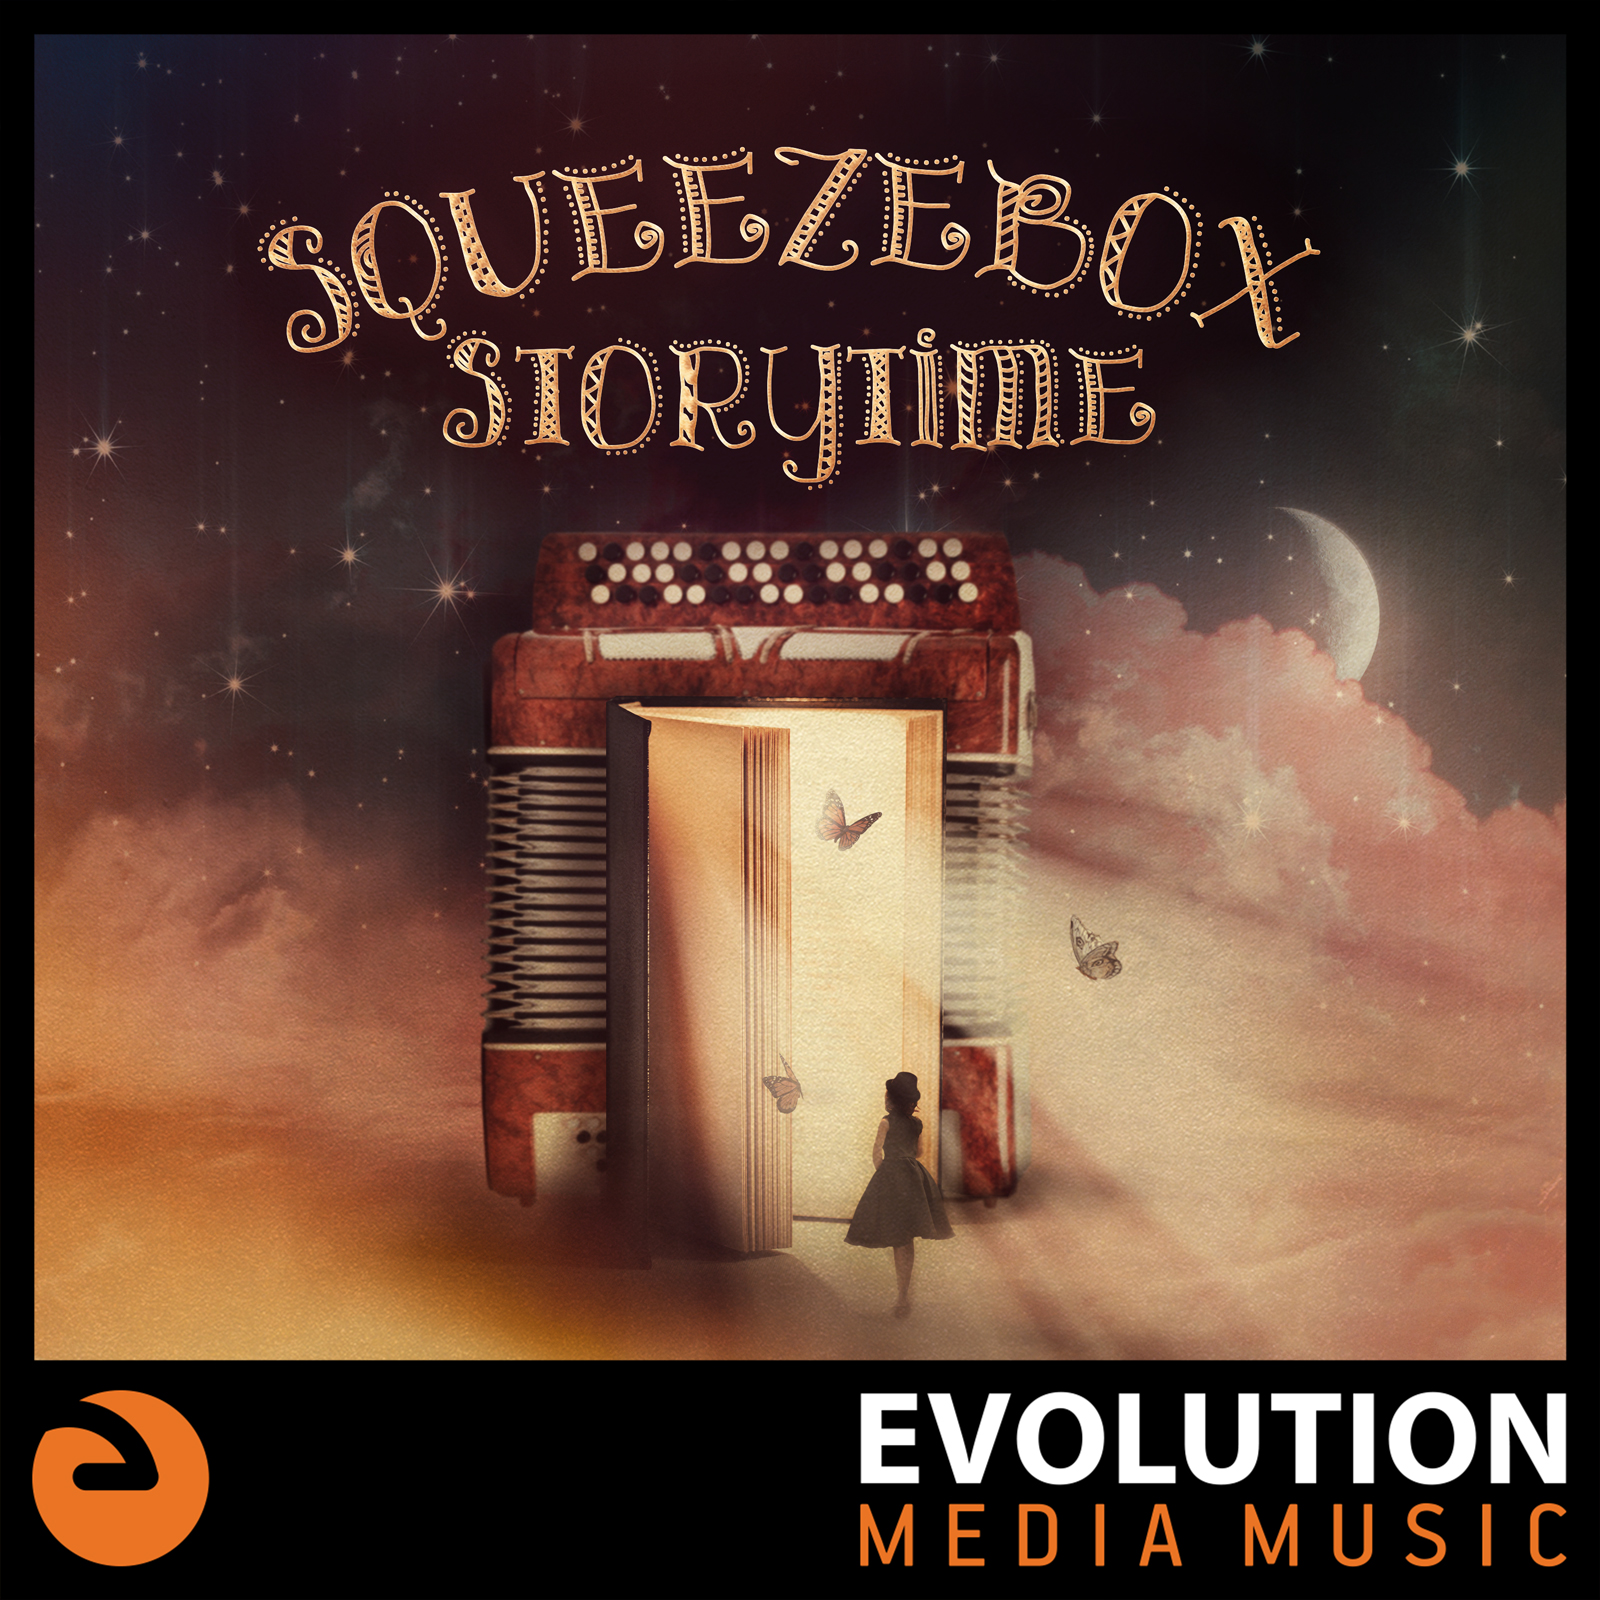 Squeezebox Storytime